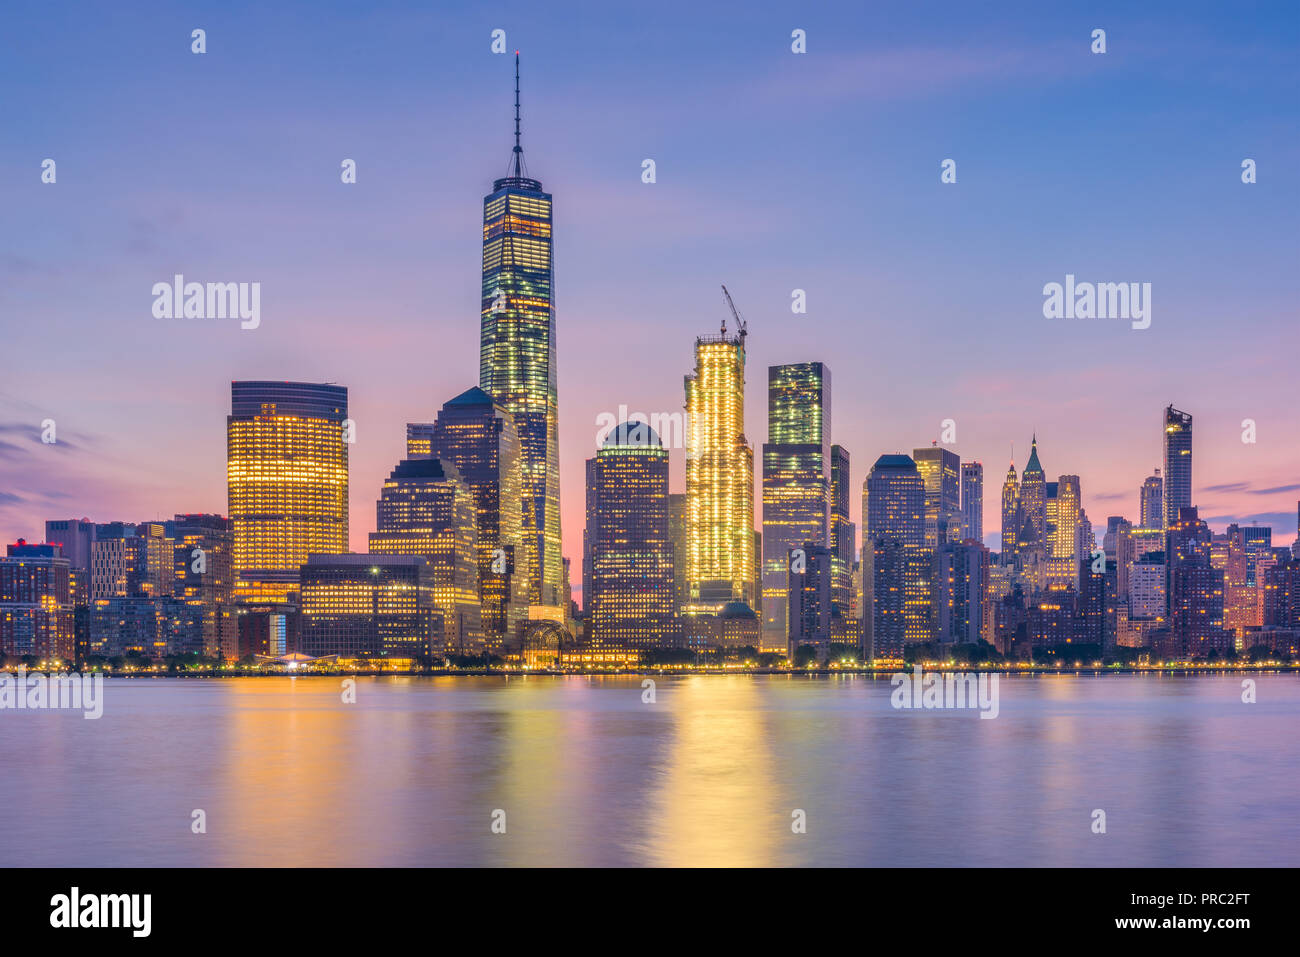 New York, New York, Lower Manhattan Skyline from across the Hudson River at dawn. Stock Photo